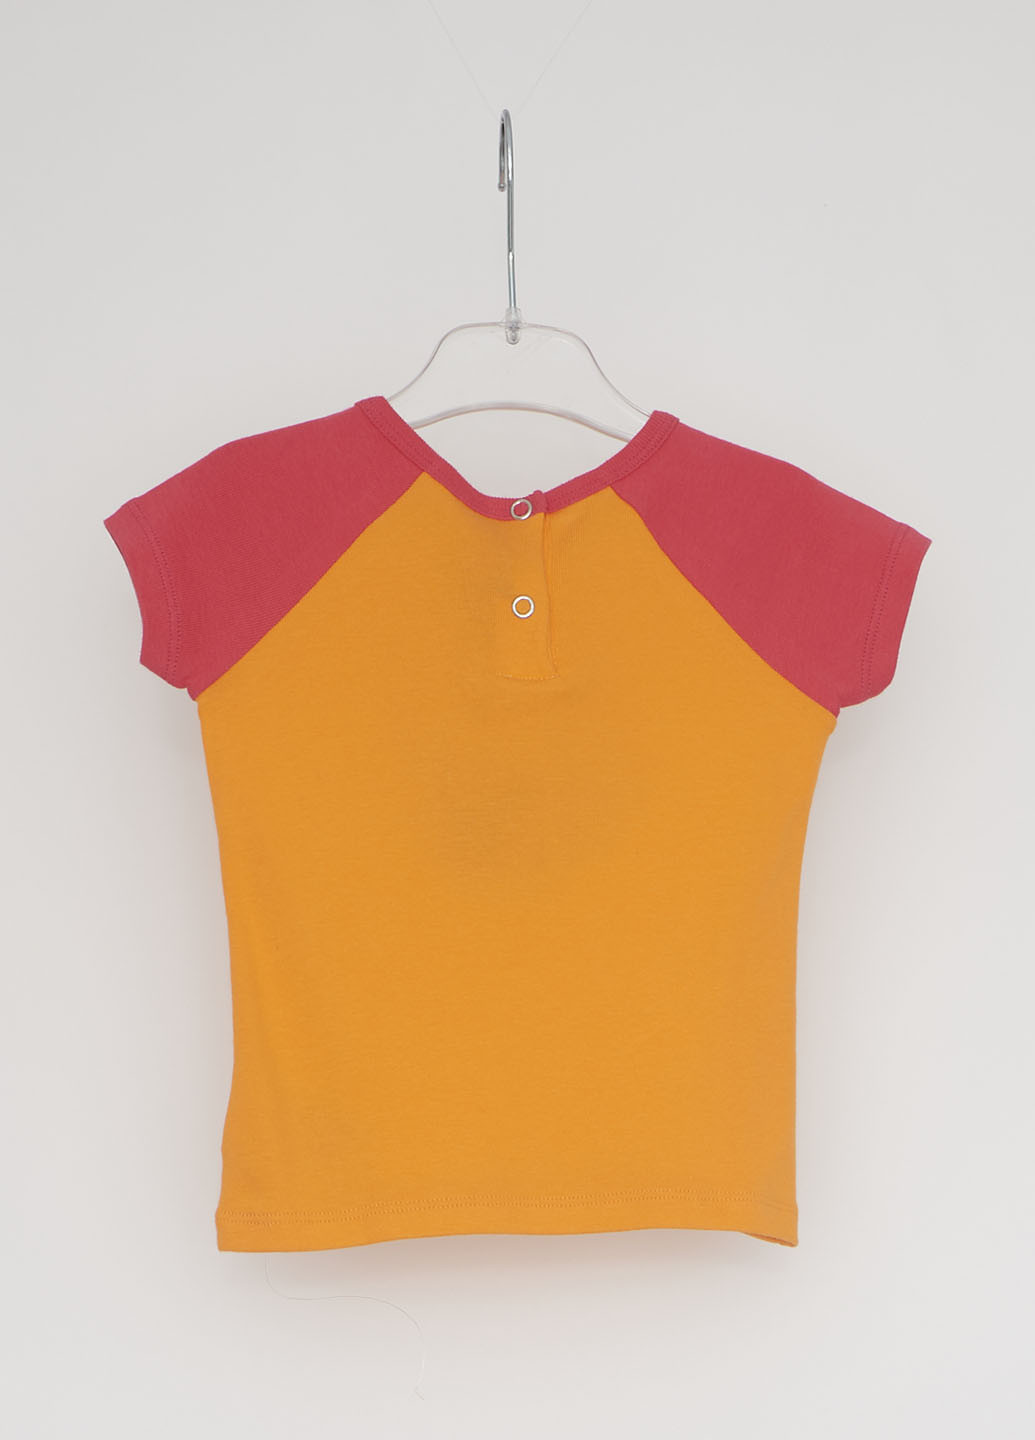 Оранжевая летняя футболка с коротким рукавом United Colors of Benetton